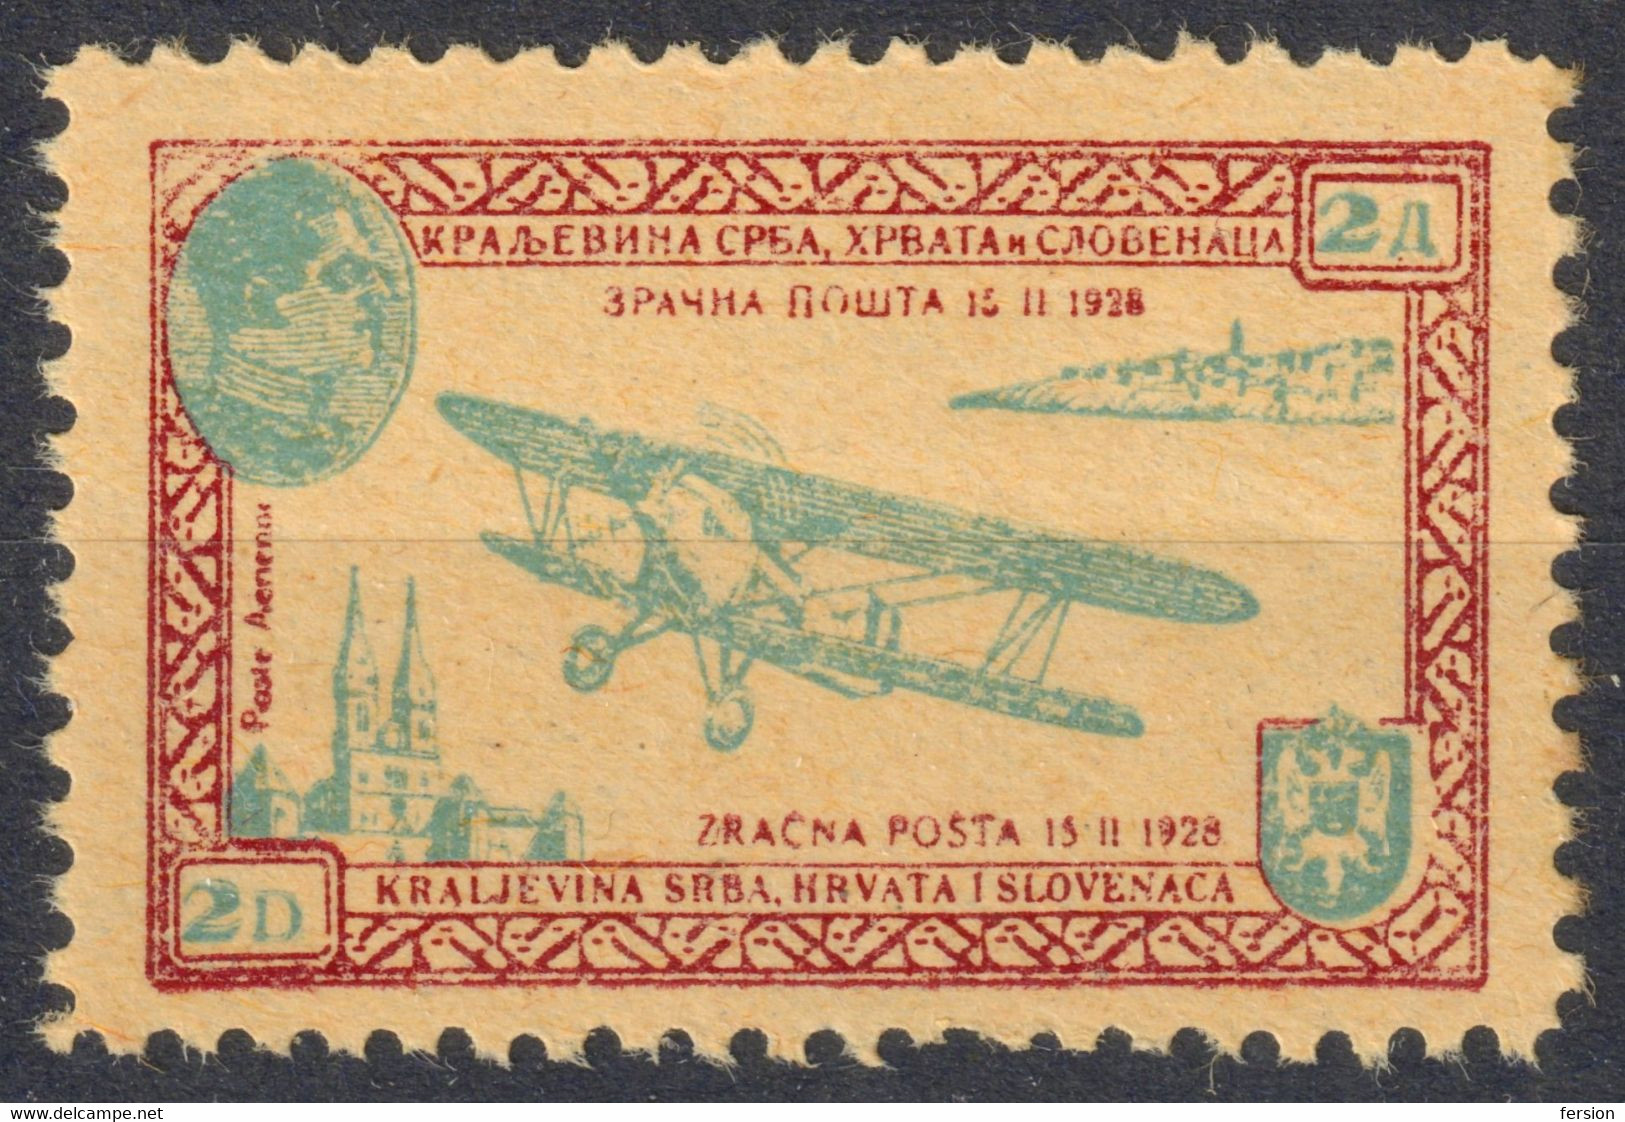 ESSAY Croatia Yugoslavia SHS 1928 AIRPLANE Biplane Zagreb Cathedal Church Zracna Posta Air Mail Par Avion King Alexander - Luftpost